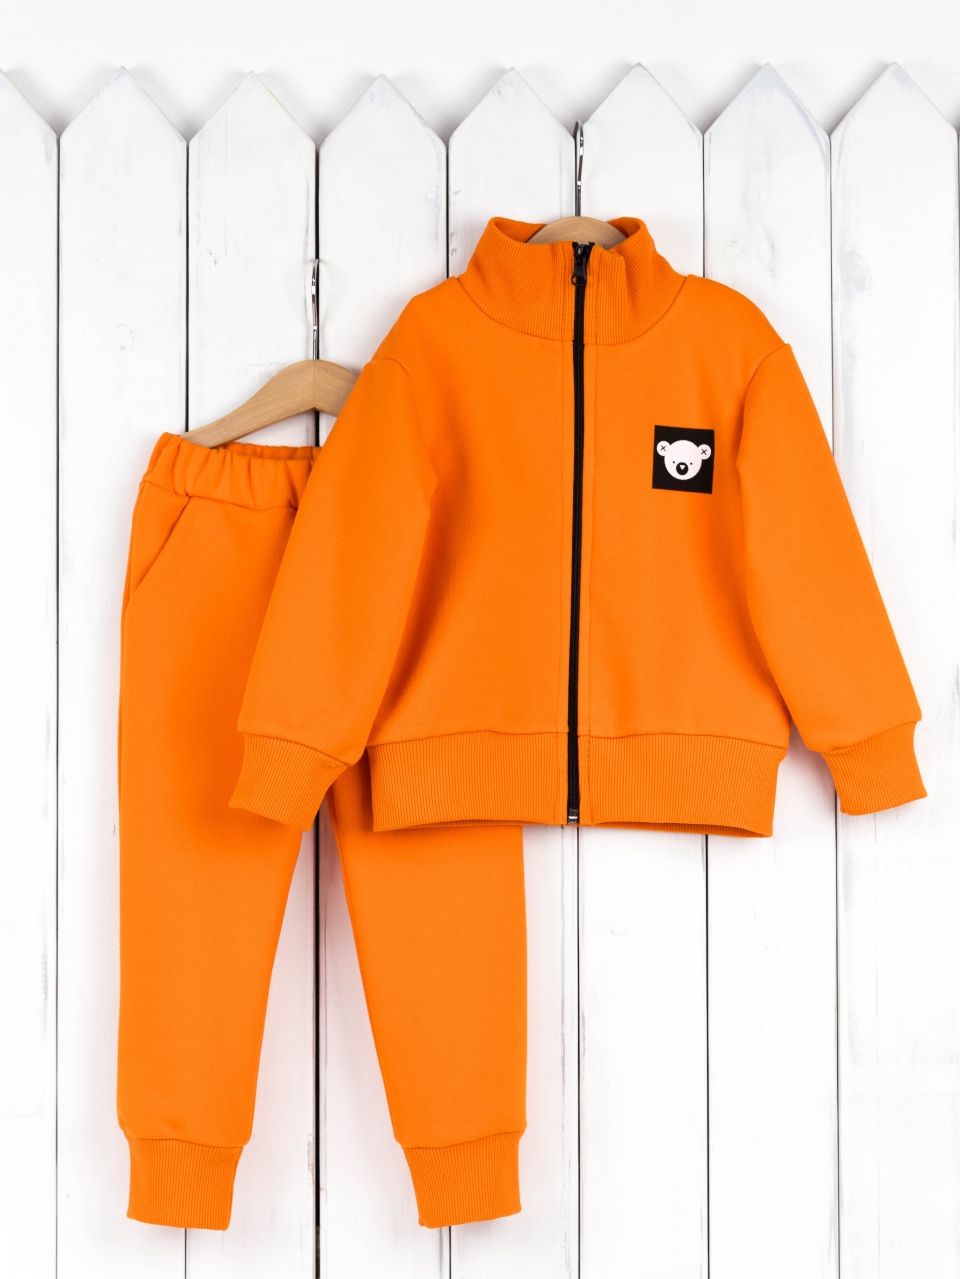 КД475/1-Ф Комплект детский р. 104 (футер 3-х нитка петля/куртка+брюки/апельсин) Бэби бум - Пенза 